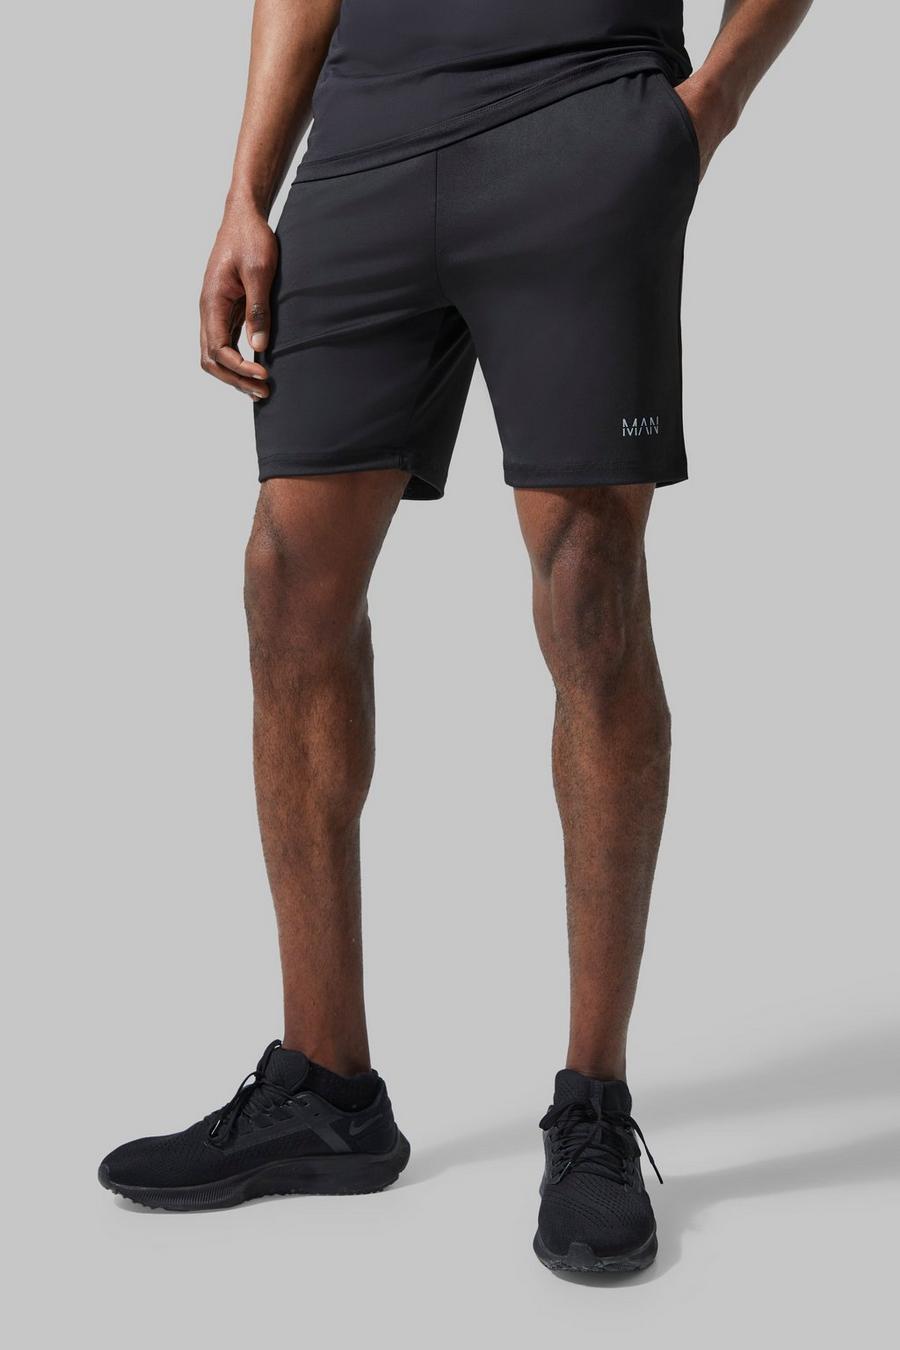 Black noir Man Active Gym Performance  Shorts